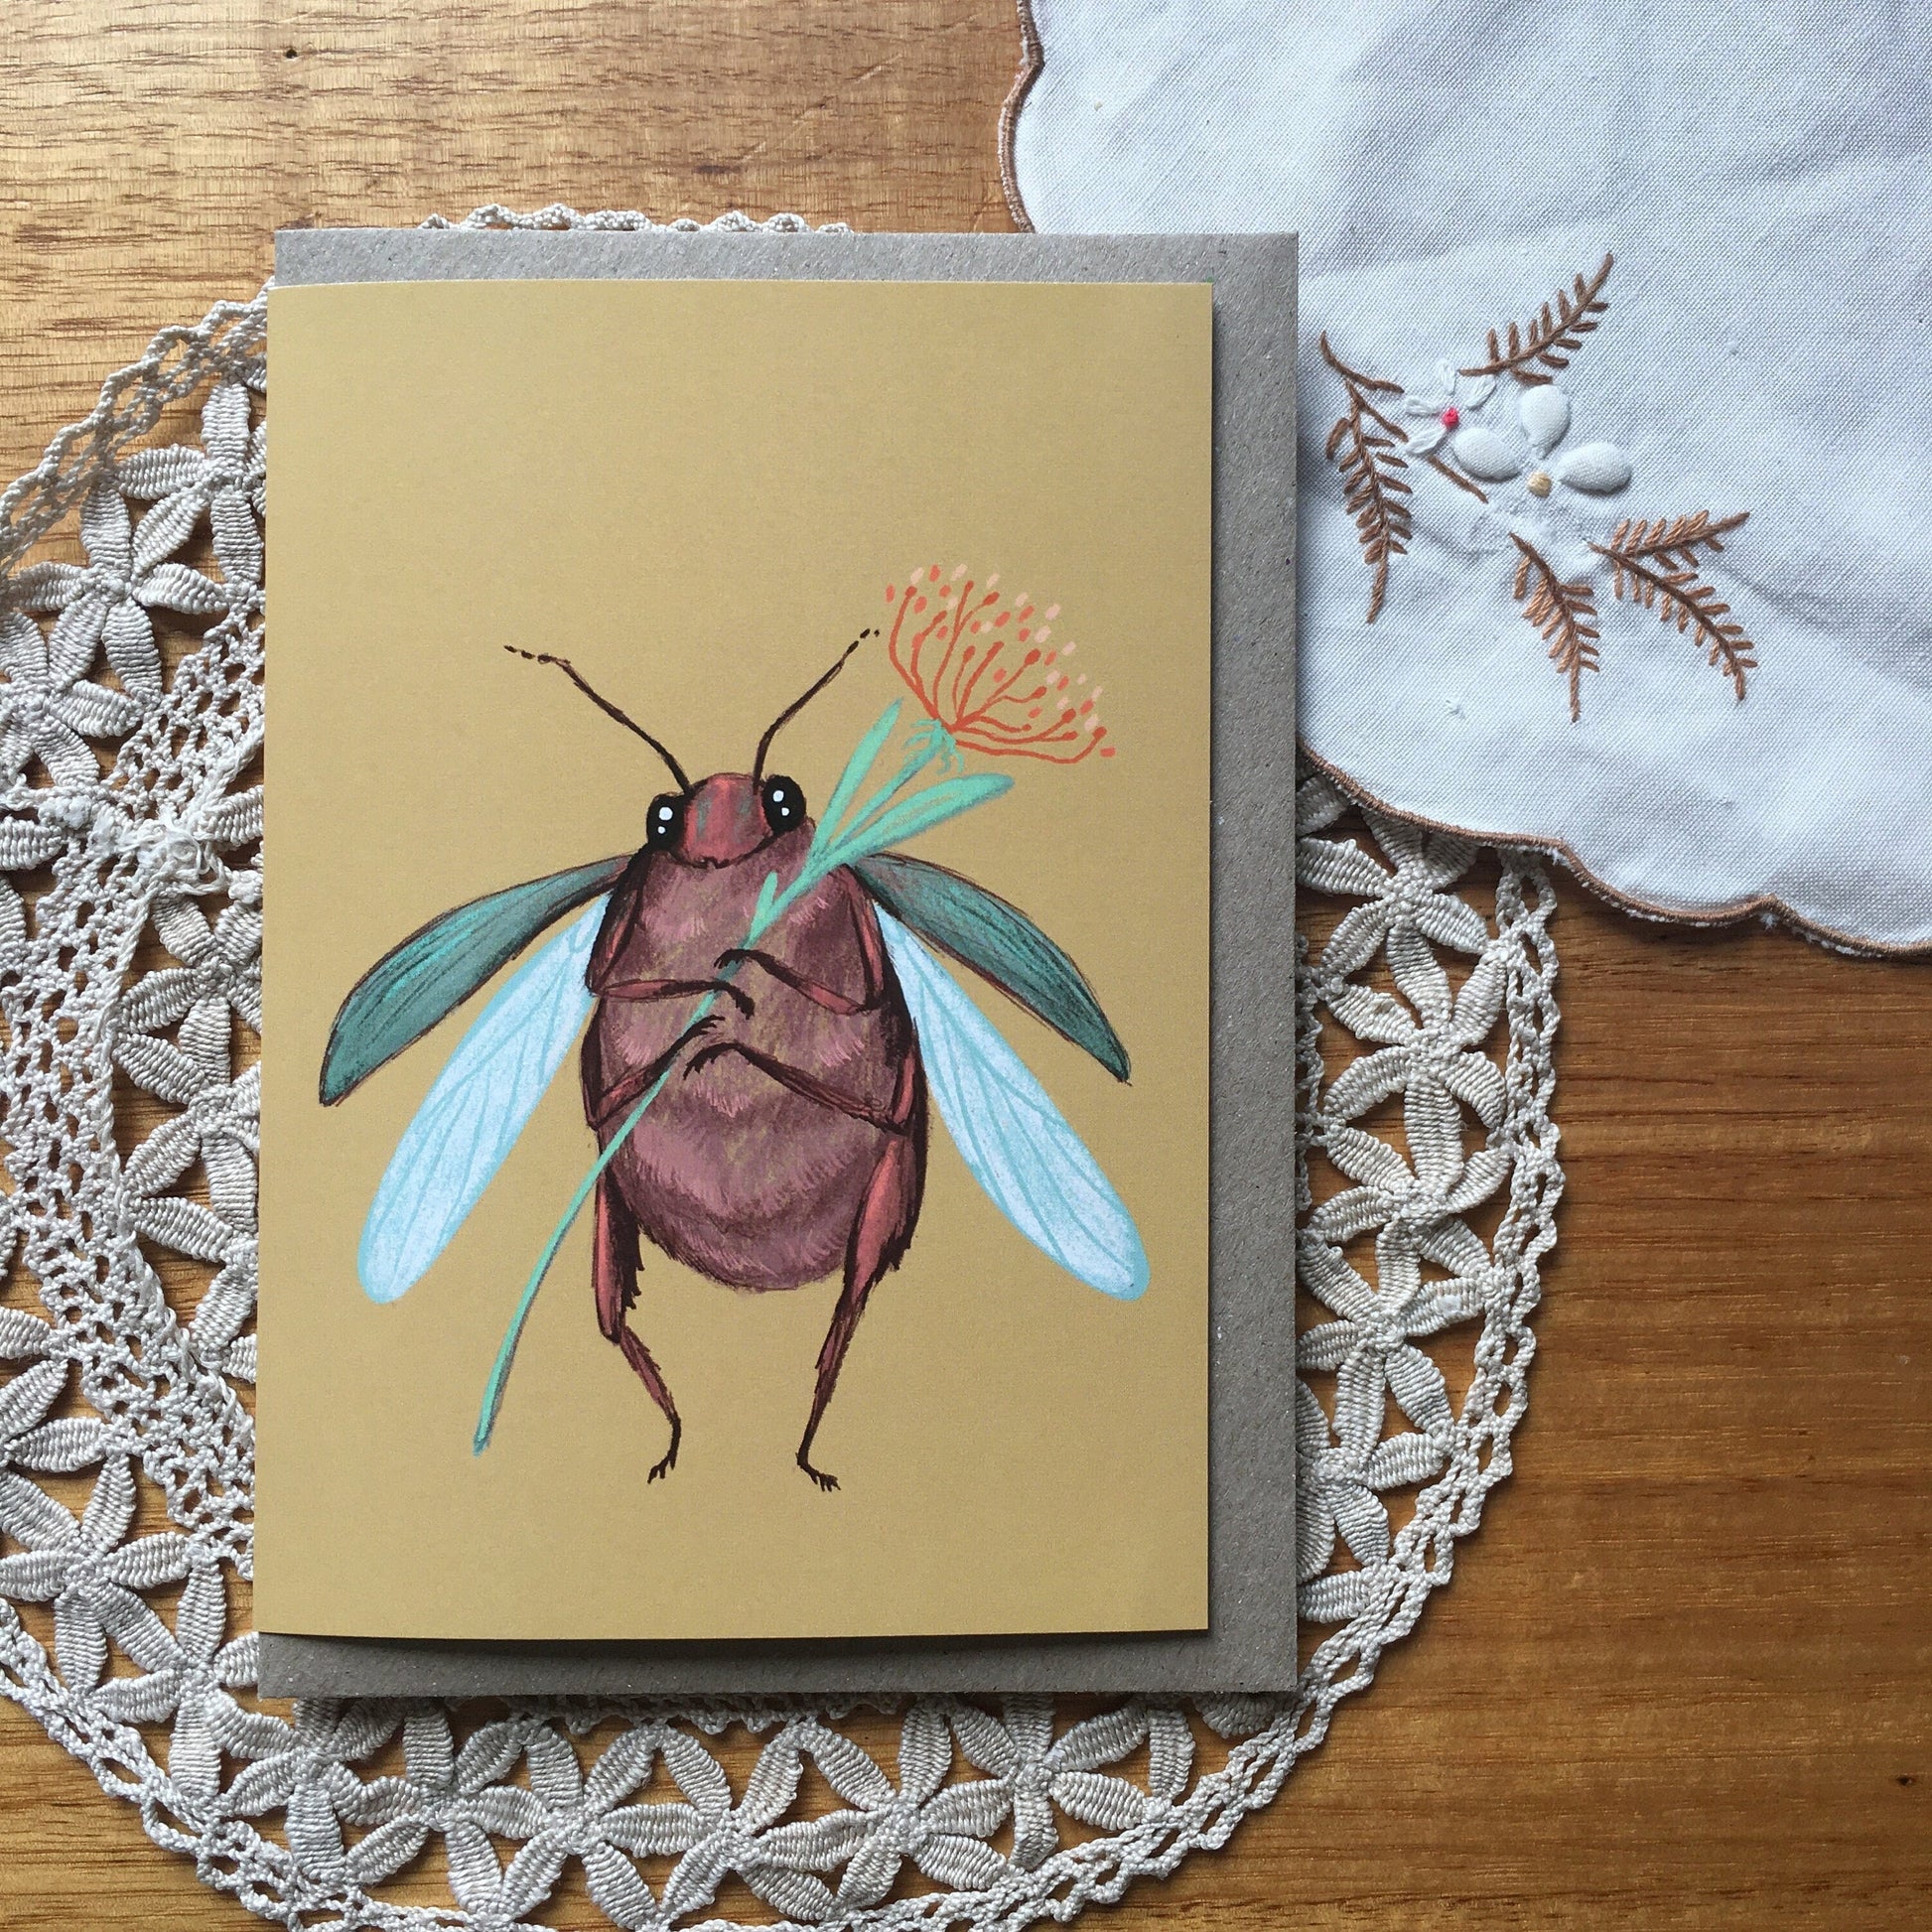 Anna Seed Art | Greeting Card - Cute Beetle. Fun illustration